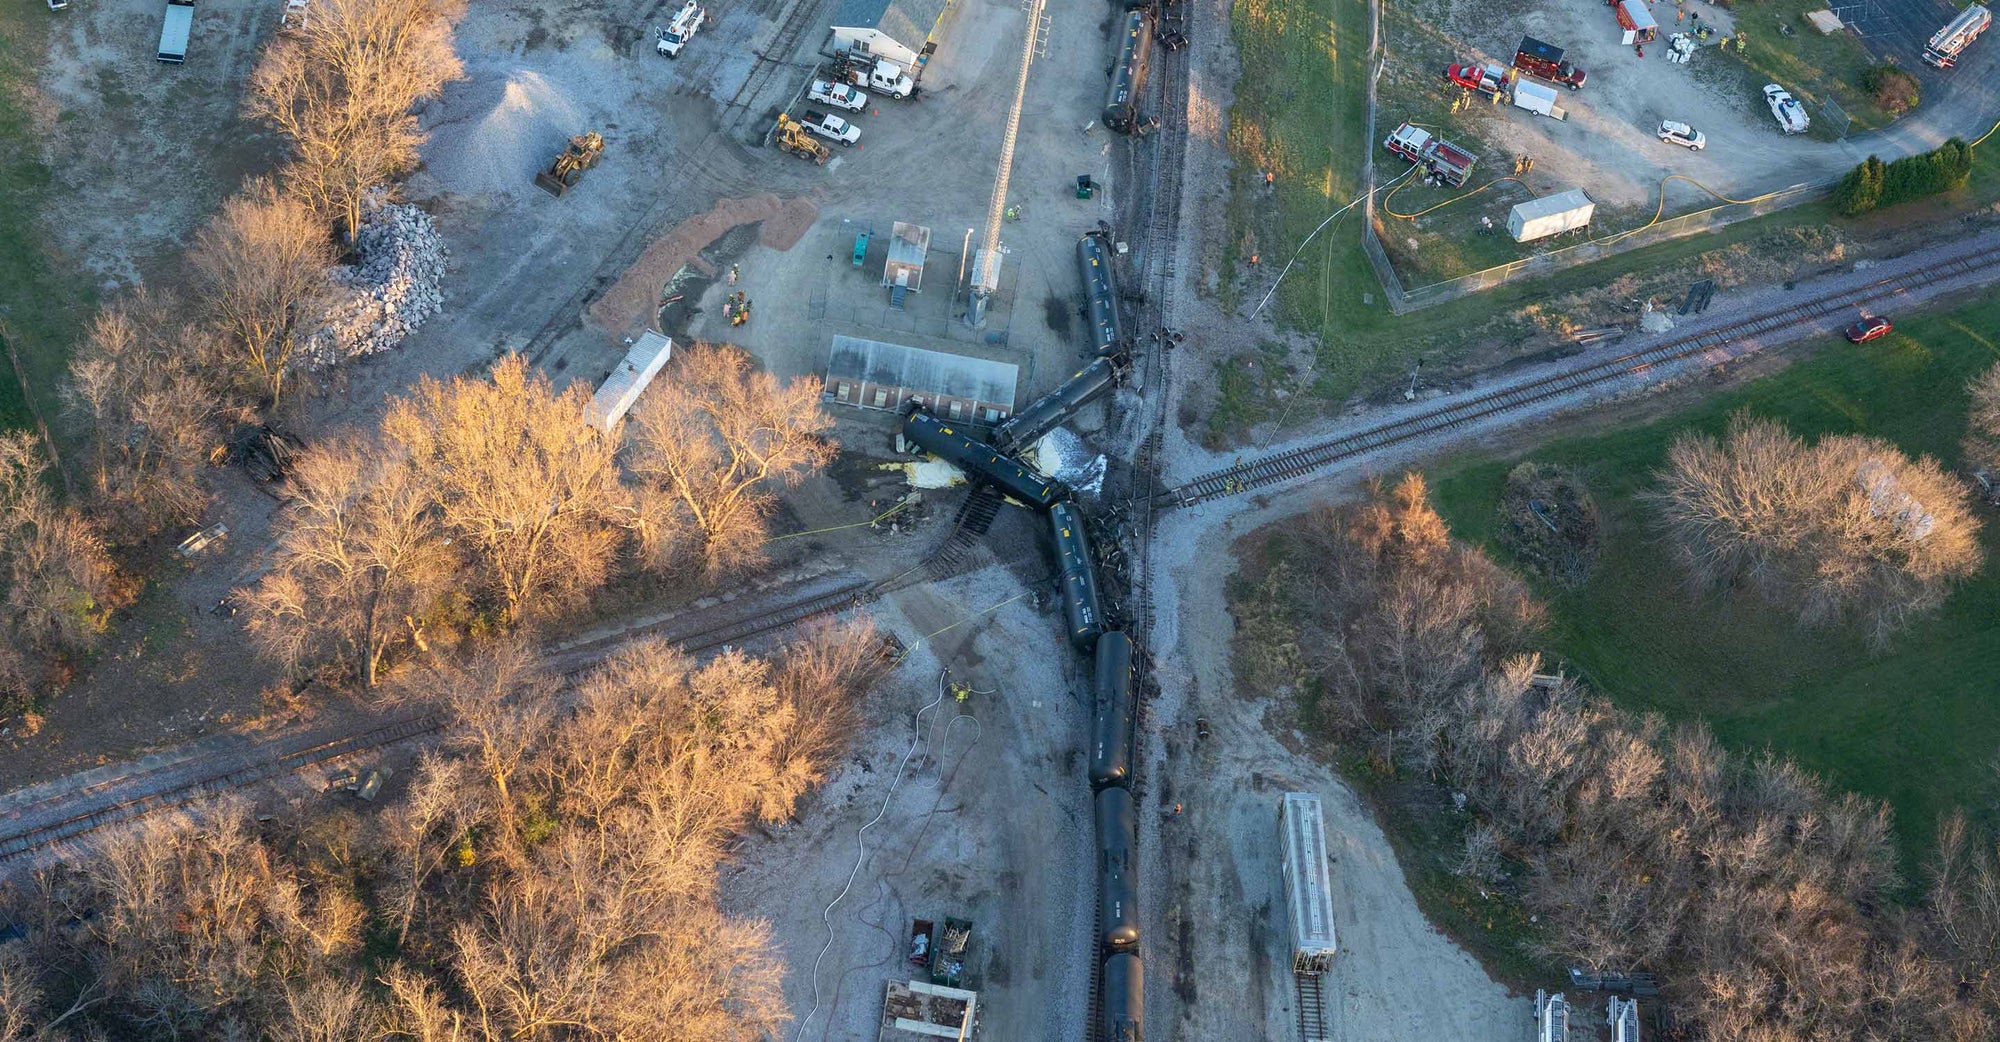 derailed train